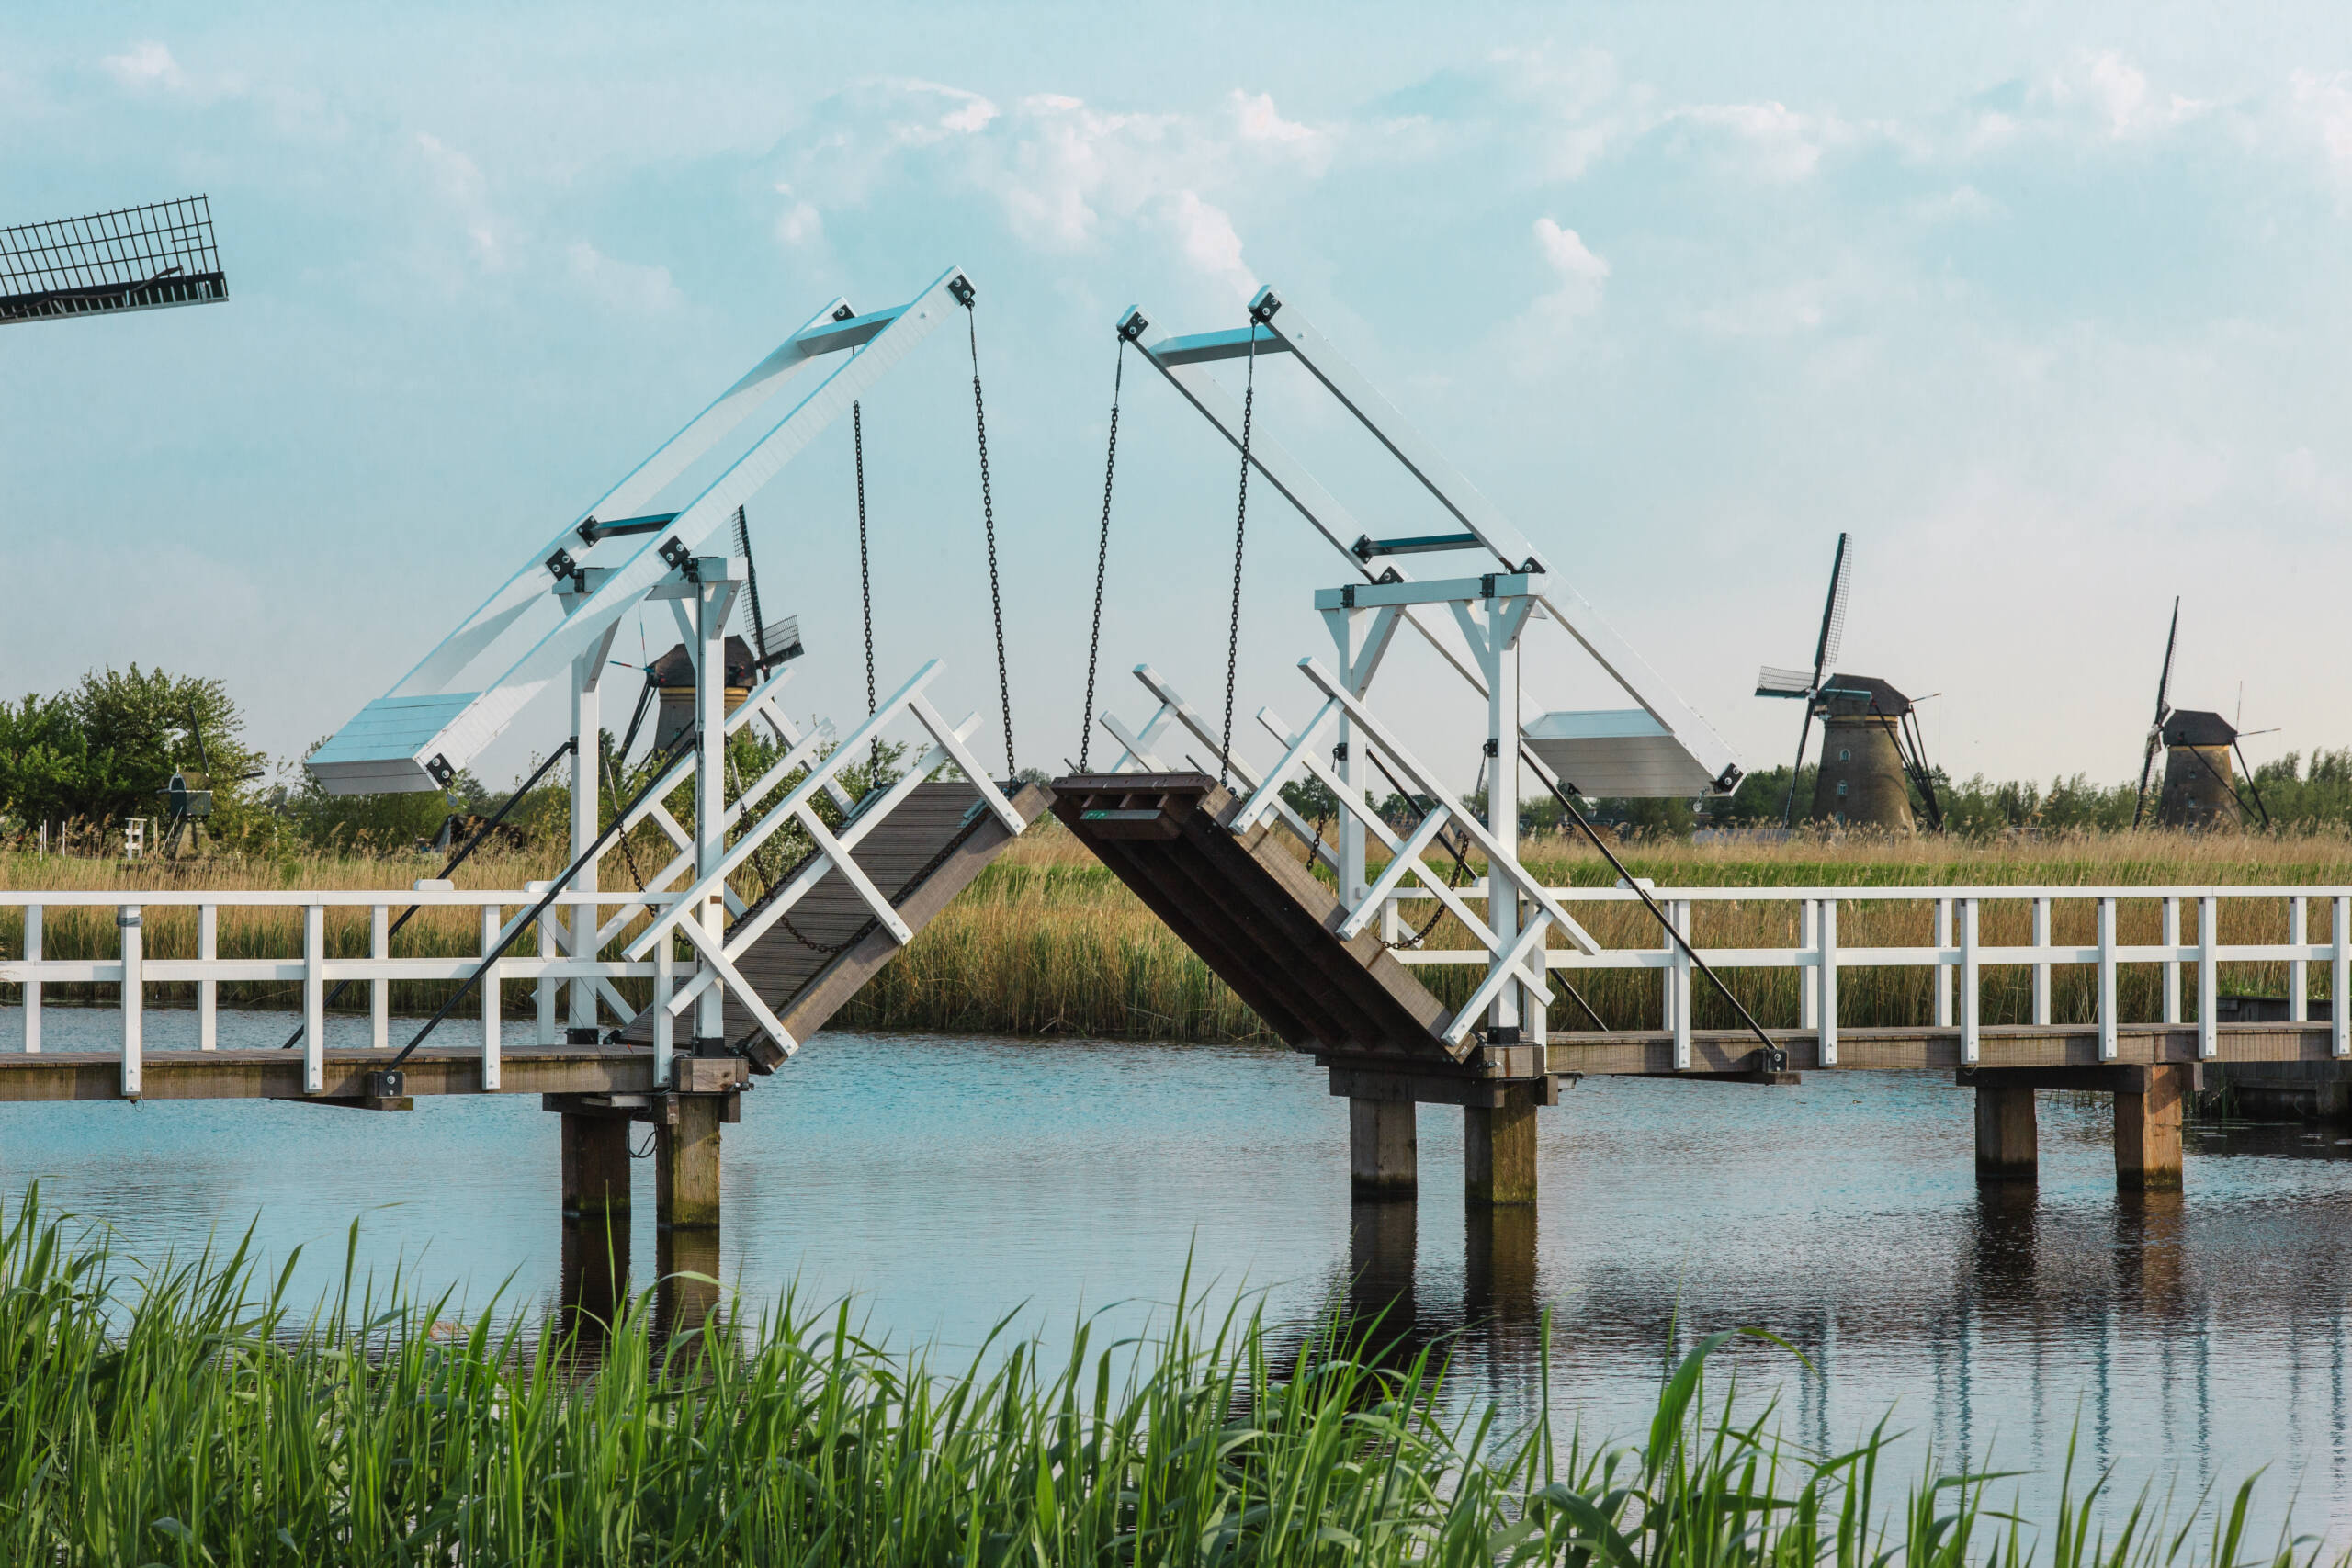 beautiful traditional dutch windmills near the water channels with drawbridge